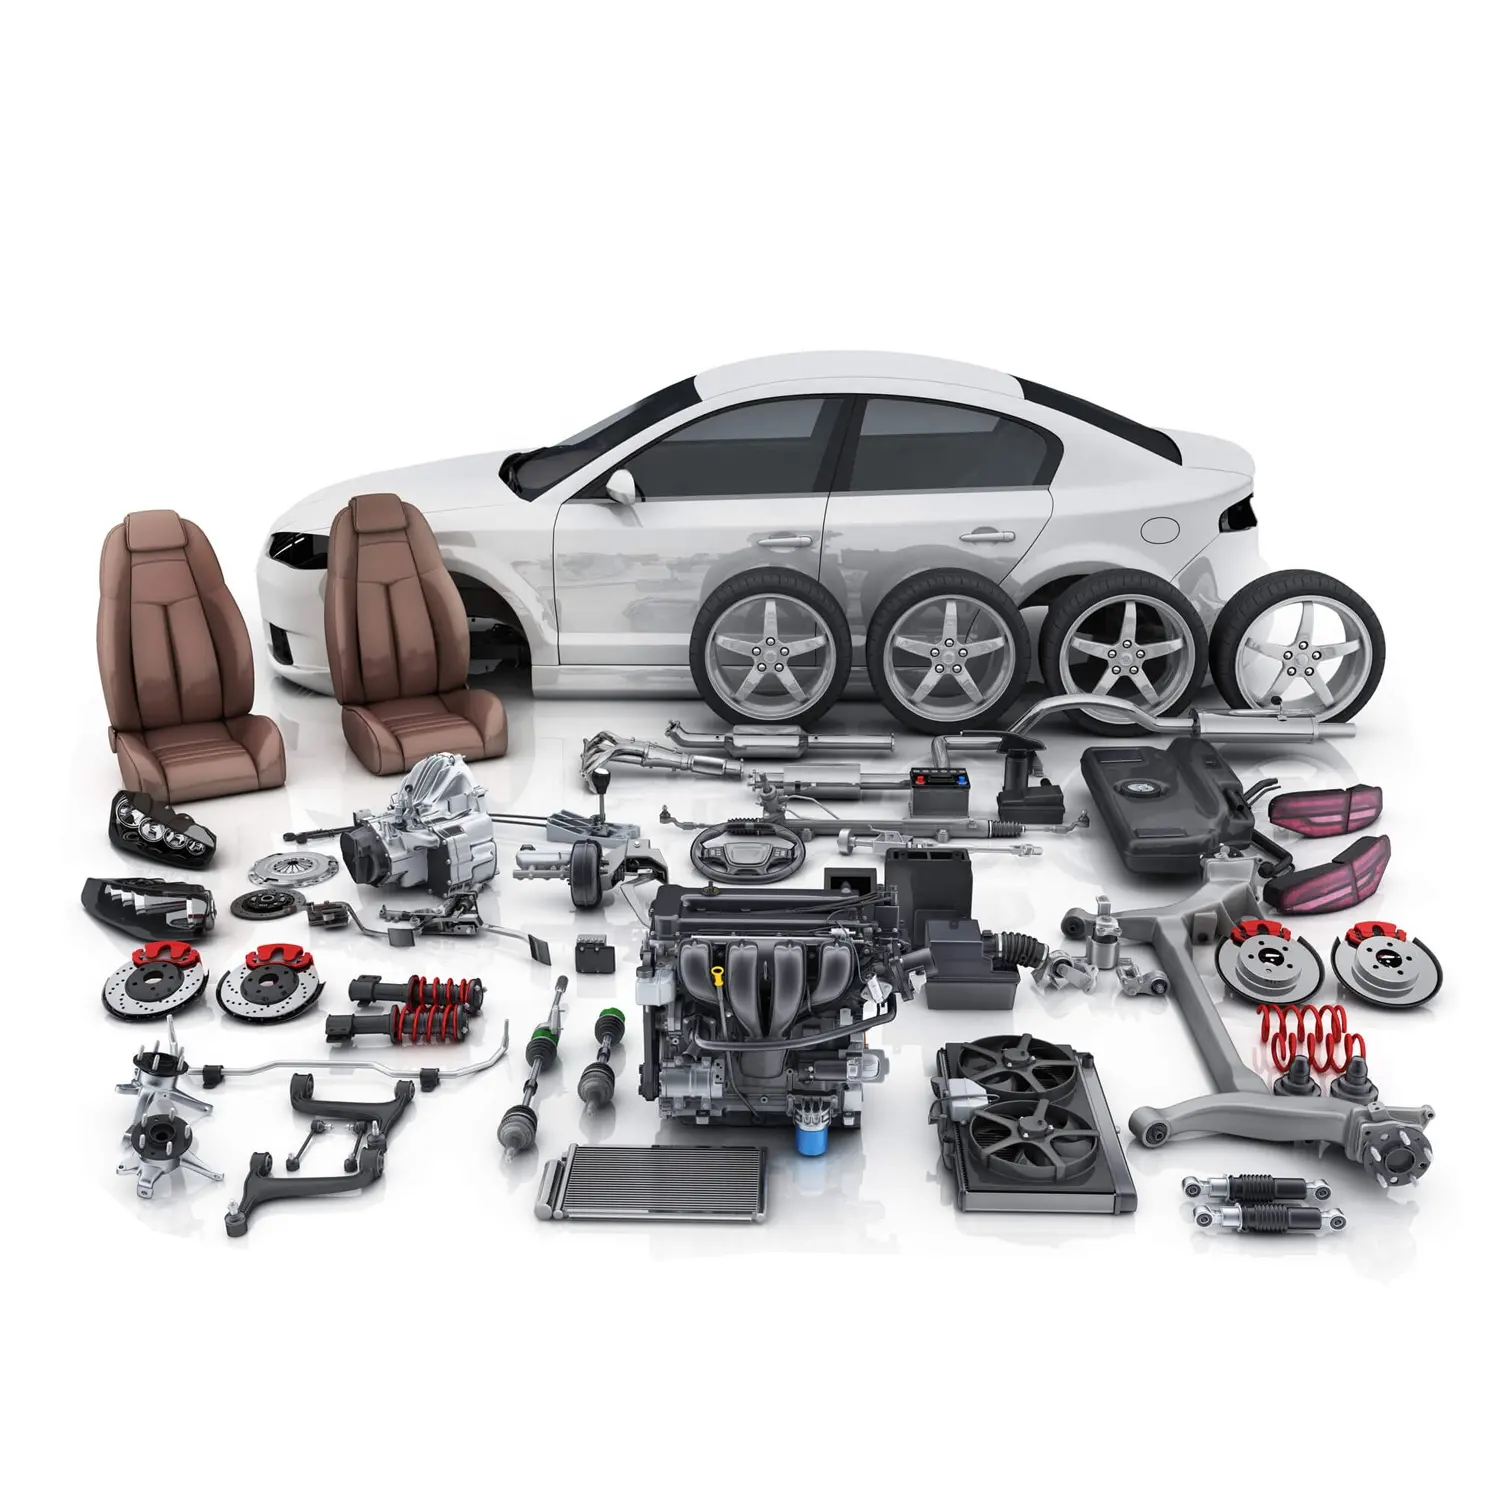 Vente en gros de pièces de rechange automobiles pour voiture BMW X1 X2 X3 X4 X5 X7 Z4 I3 I8 IX3 bmw série 3 volant e90